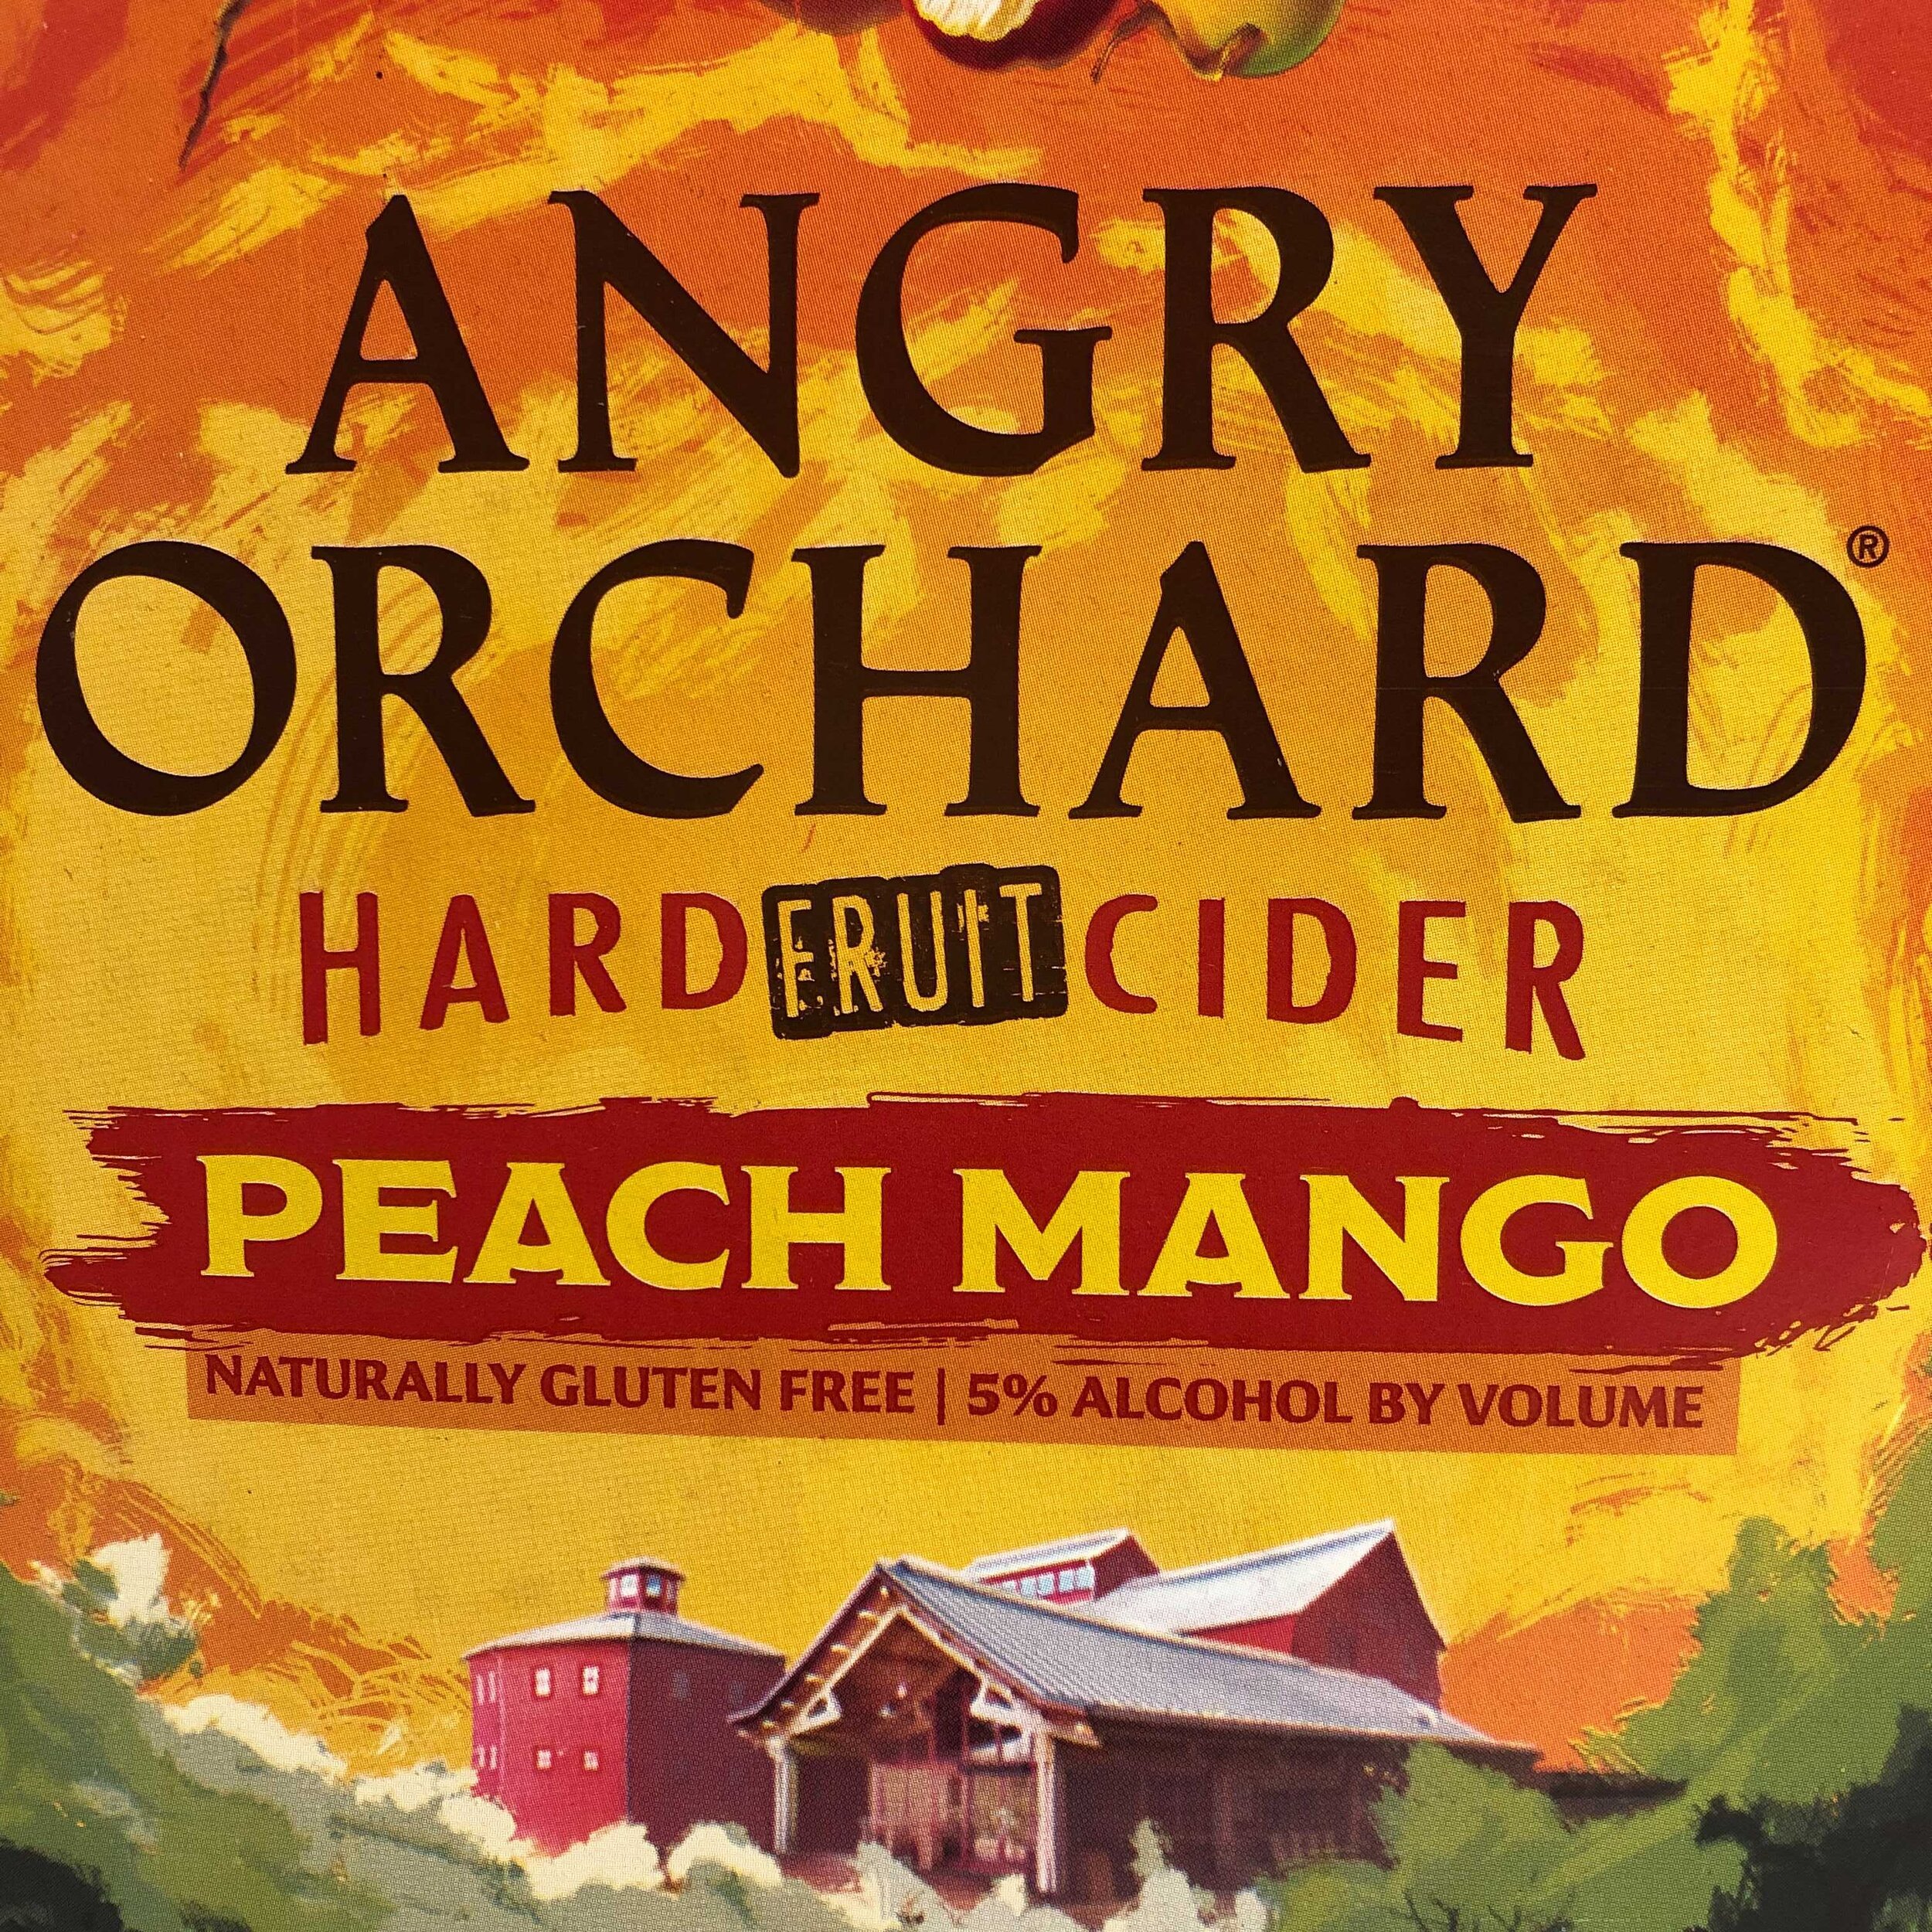 Angry Orchard Peach Mango.jpg